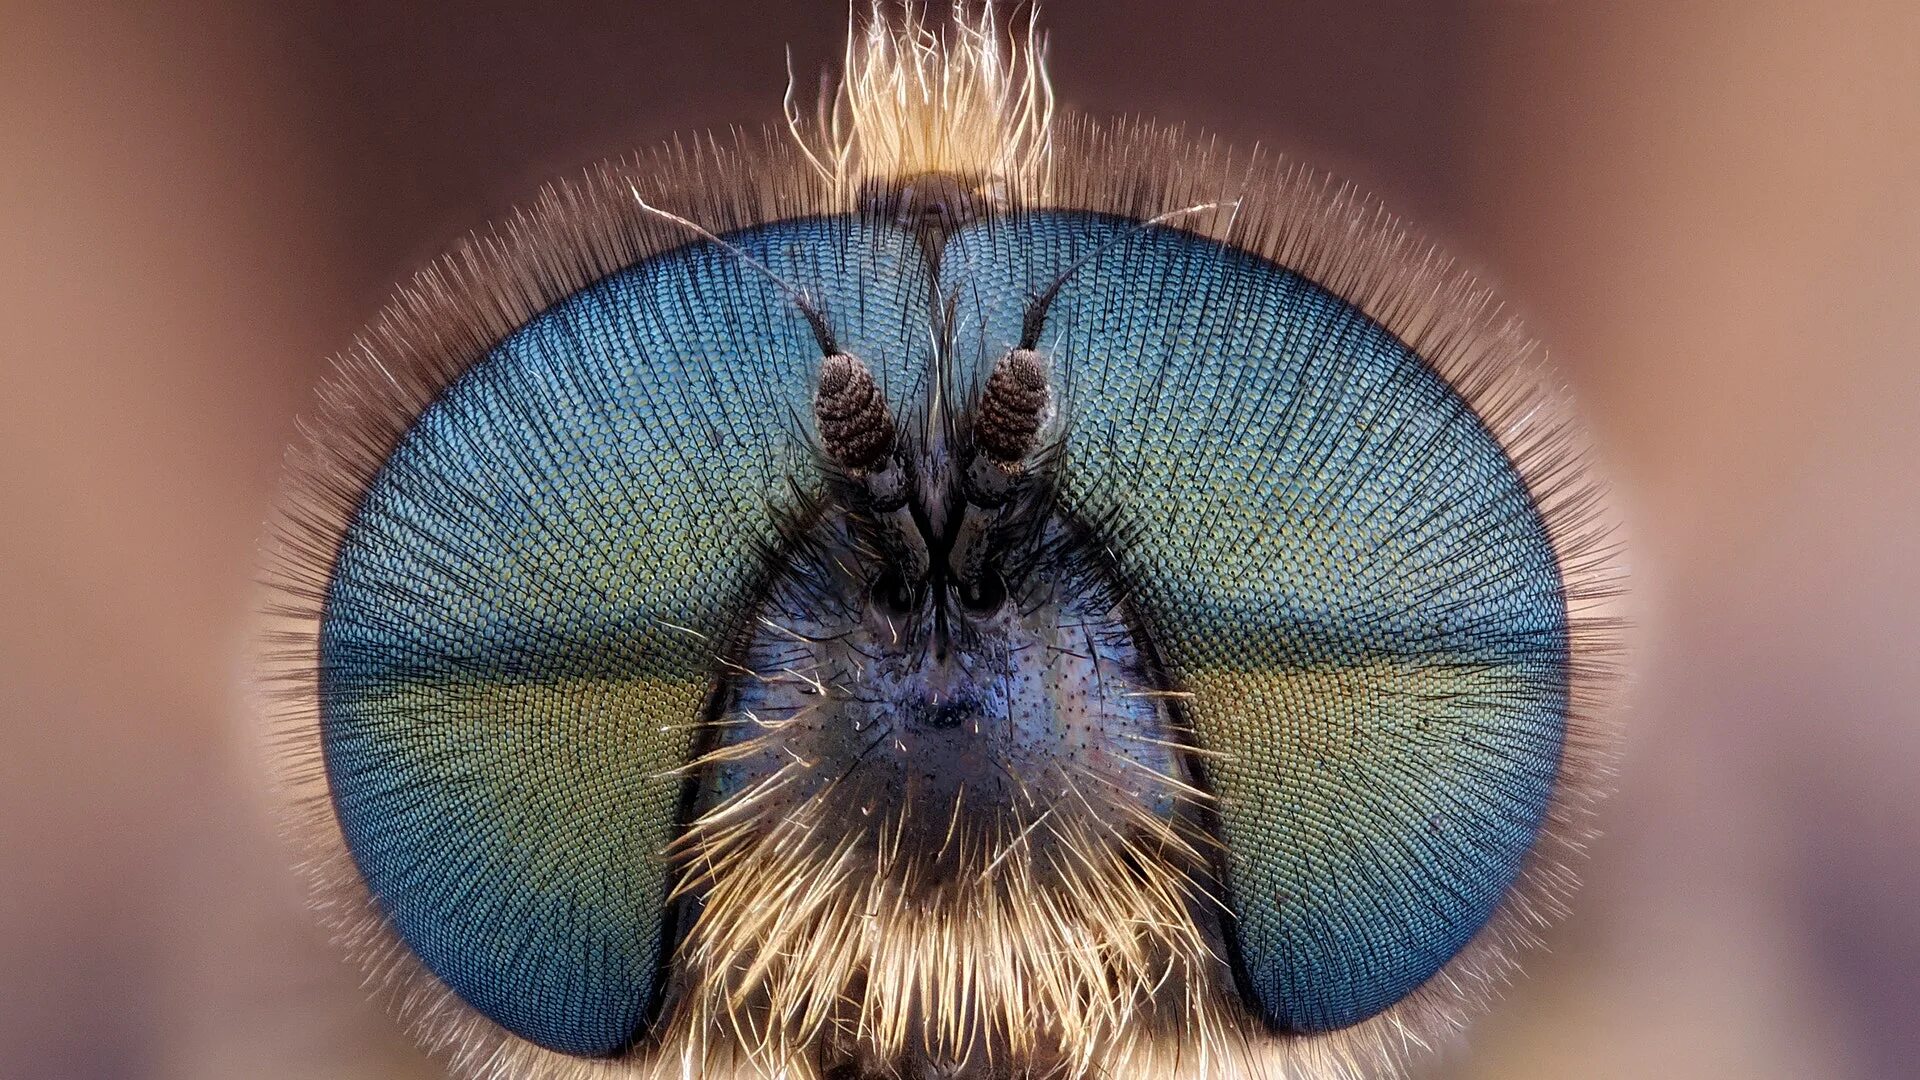 Хоботок мухи. Глаза бабочки. Макросъемка насекомых. Глаза мухи.